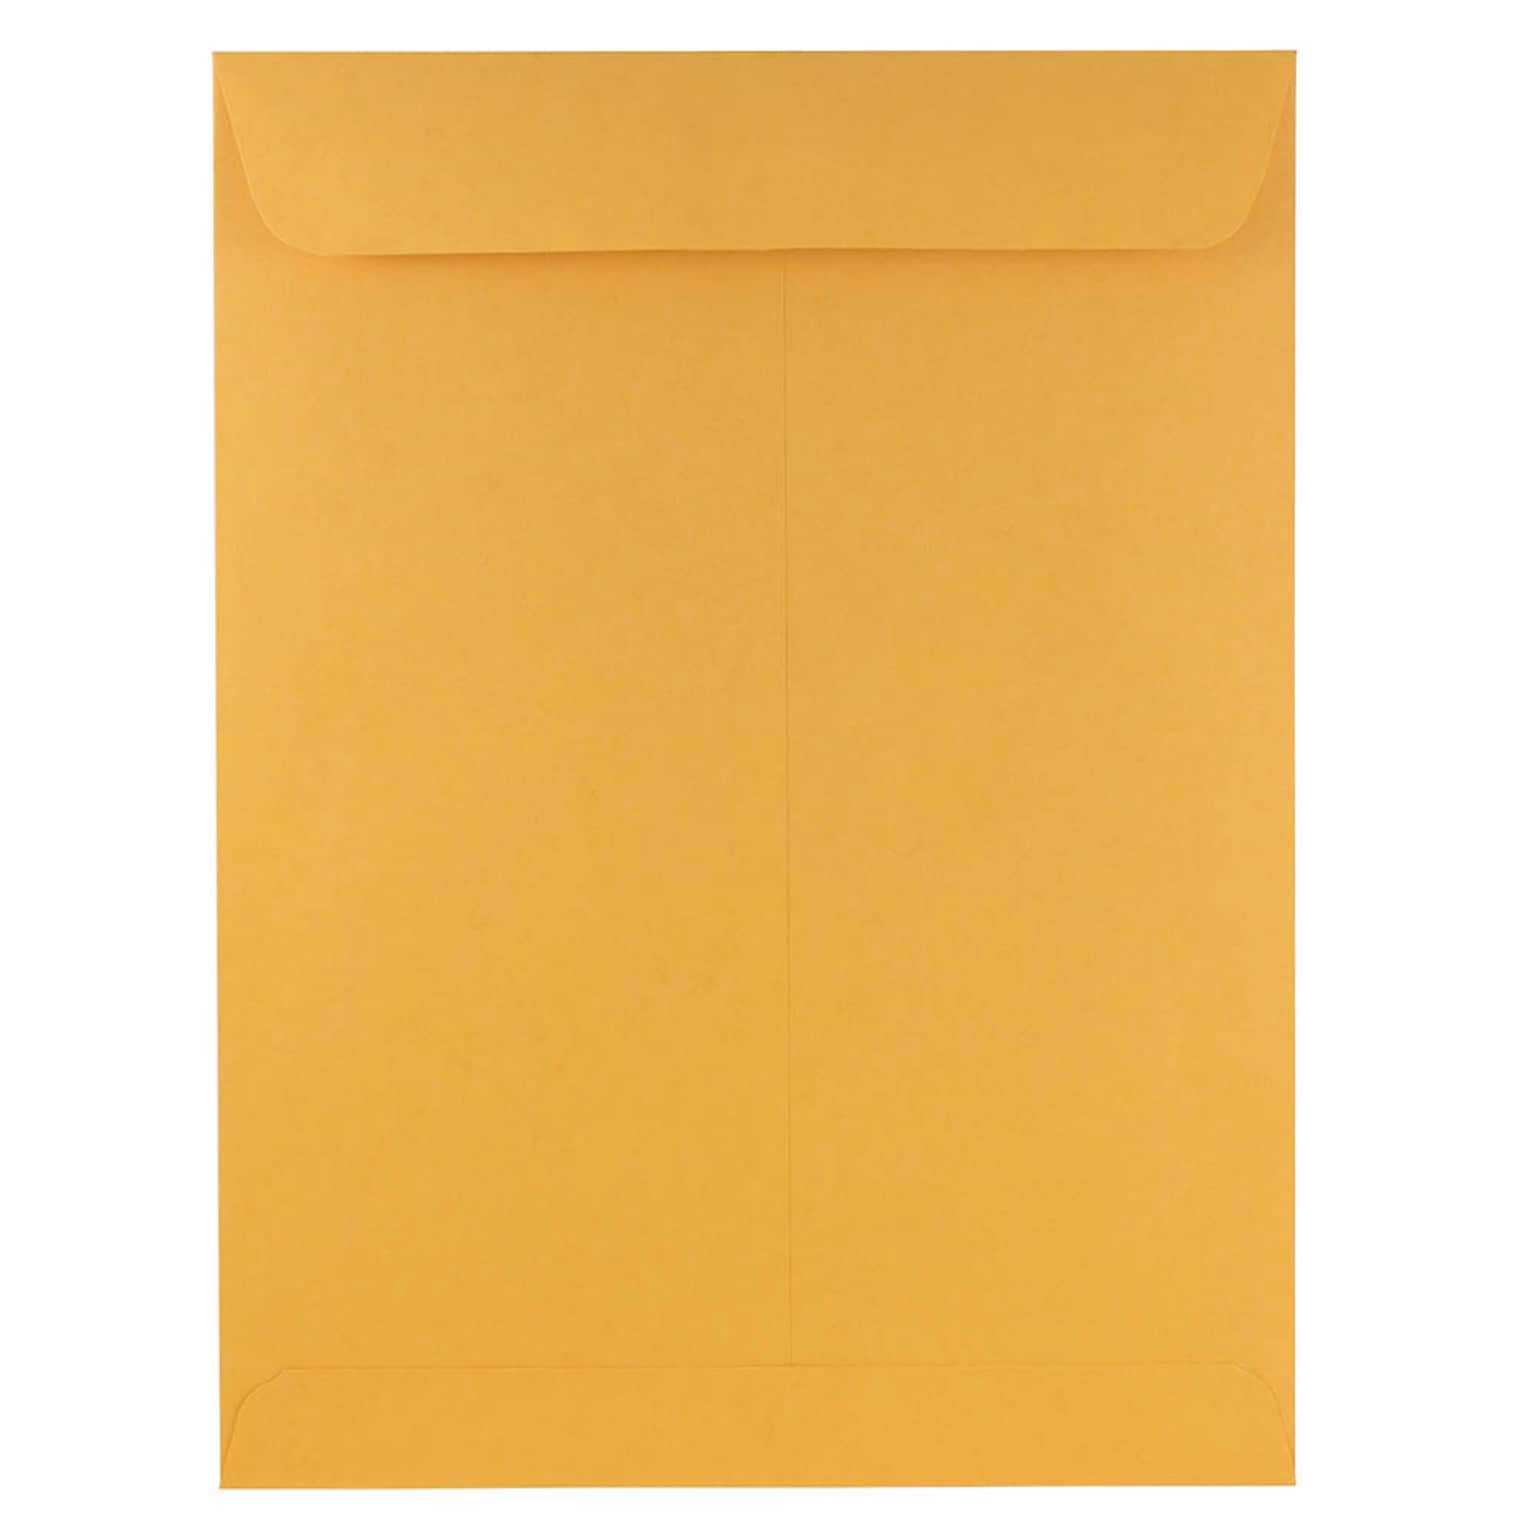 JAM Paper Open End Catalog Envelope, 9 x 12, Brown Kraft, 100/Pack (4132)